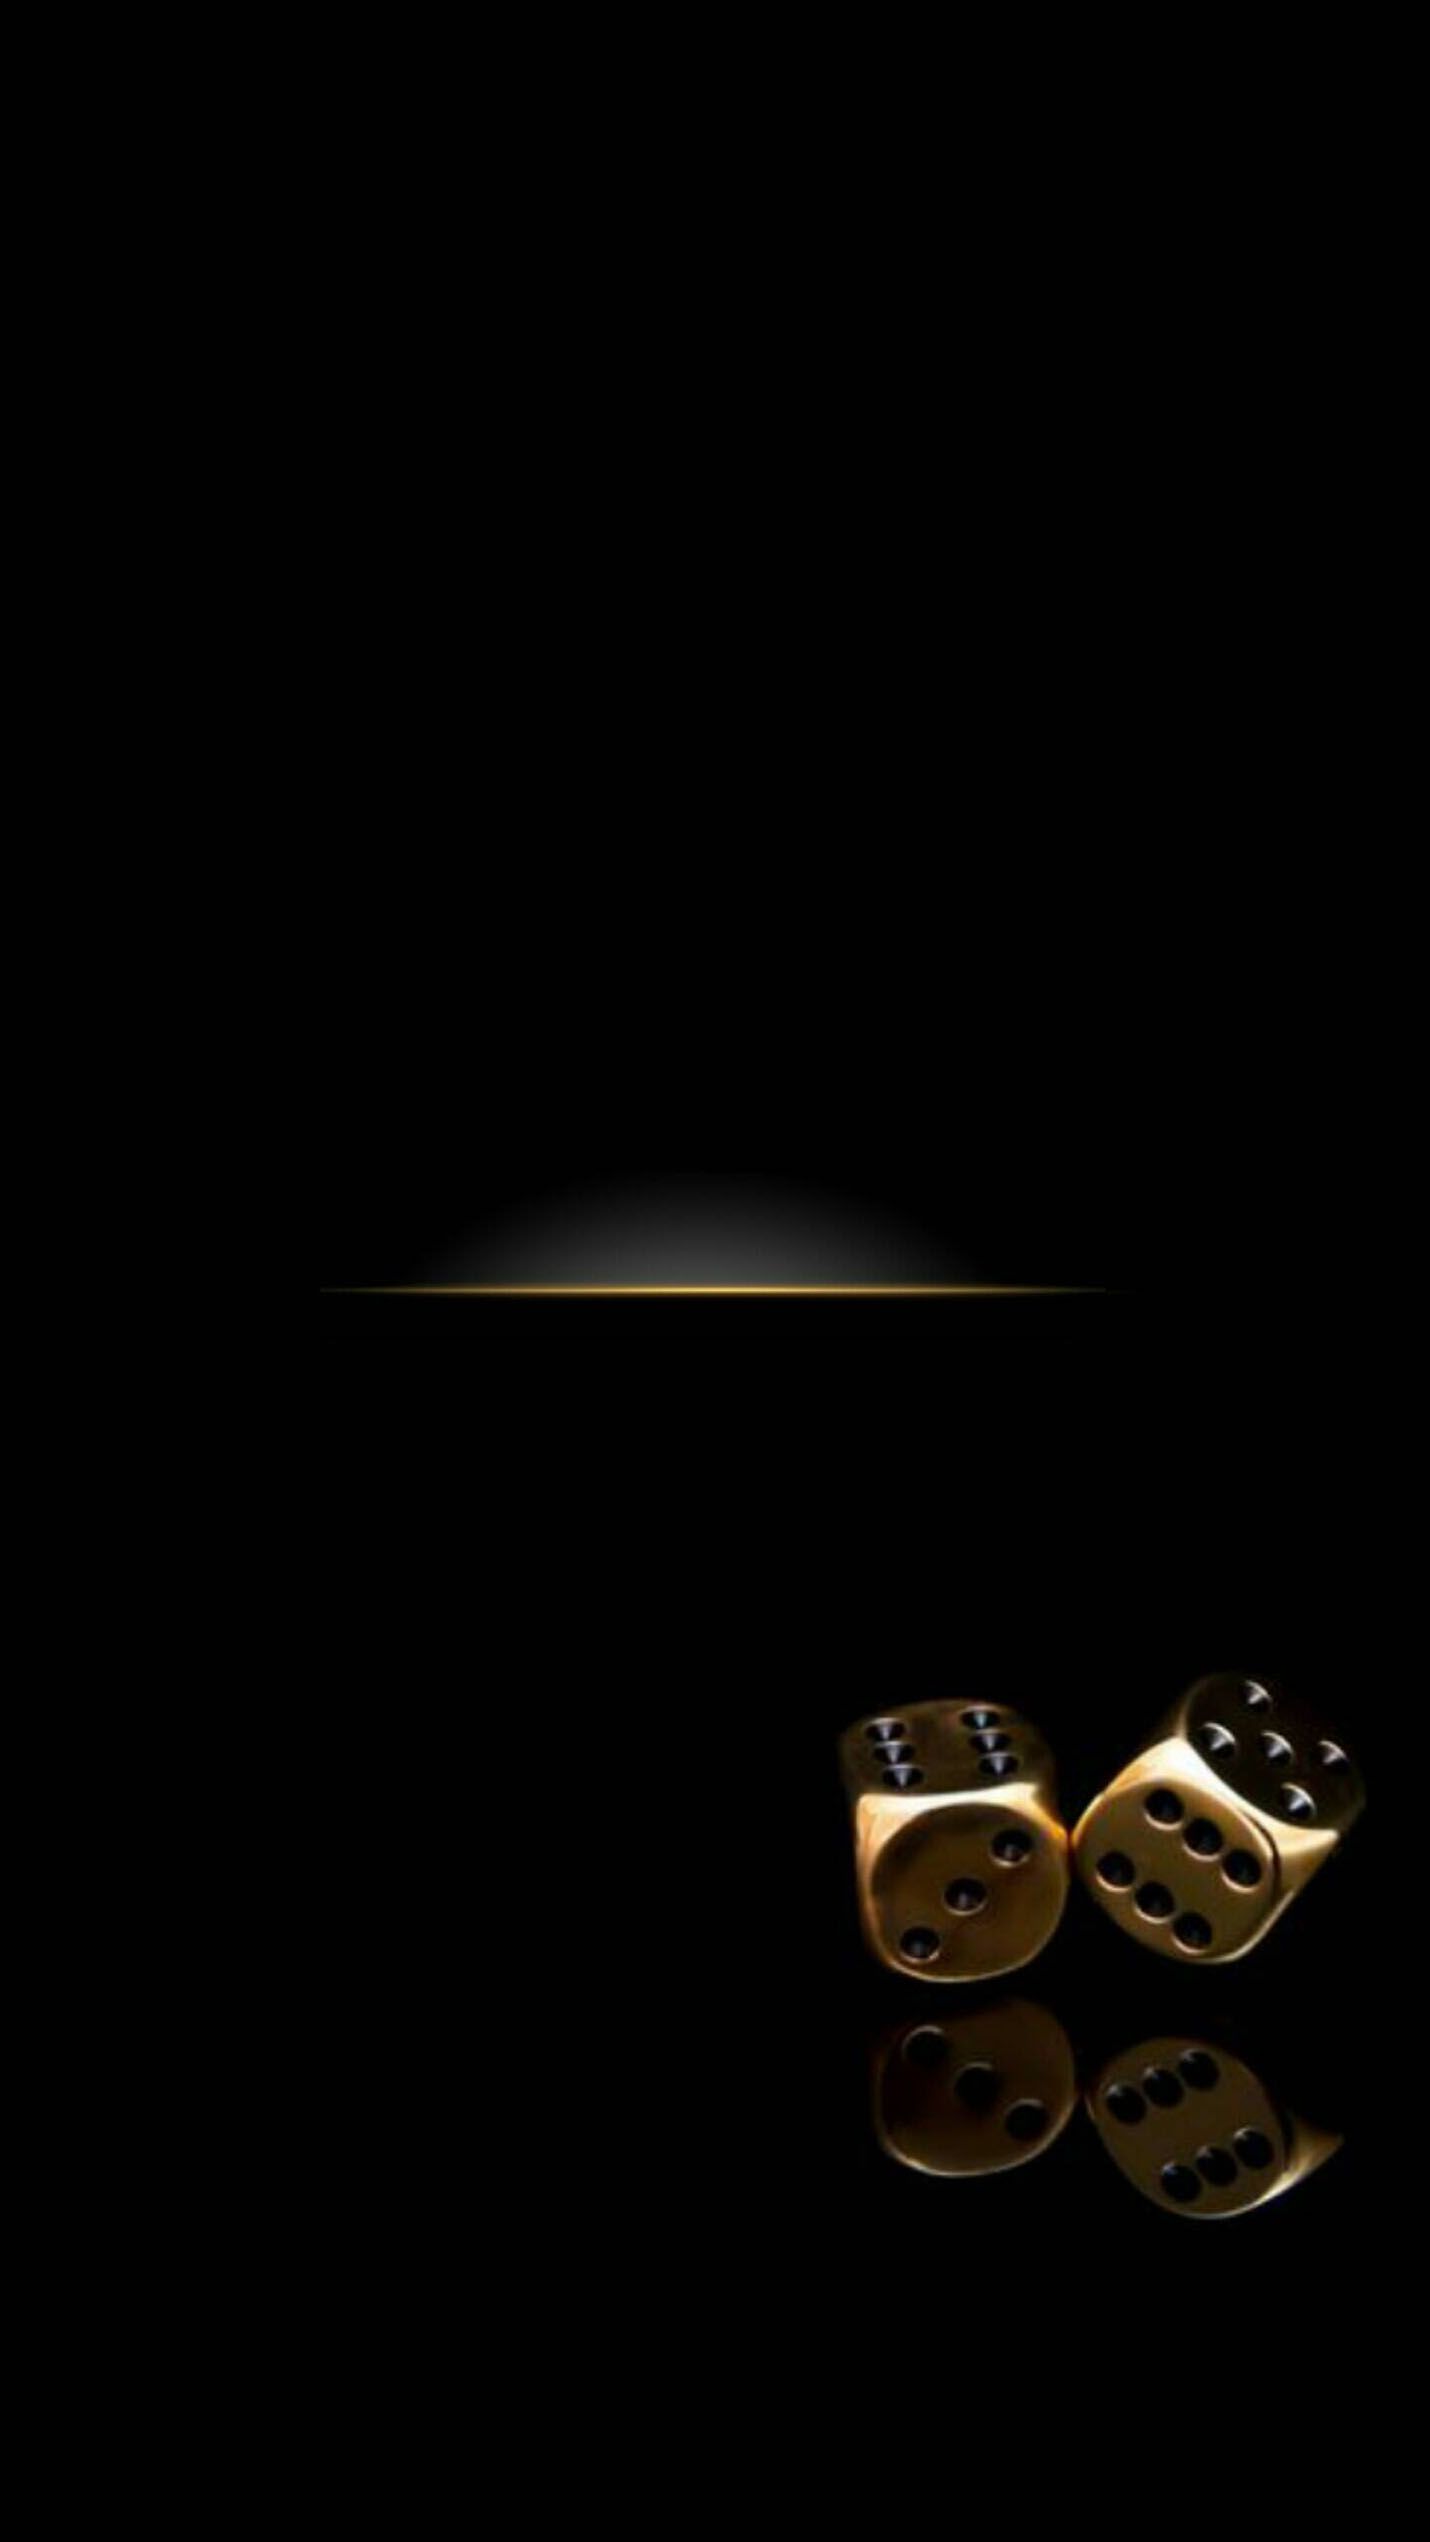 Gold Dice HD Wallpaper In Link Ultimate